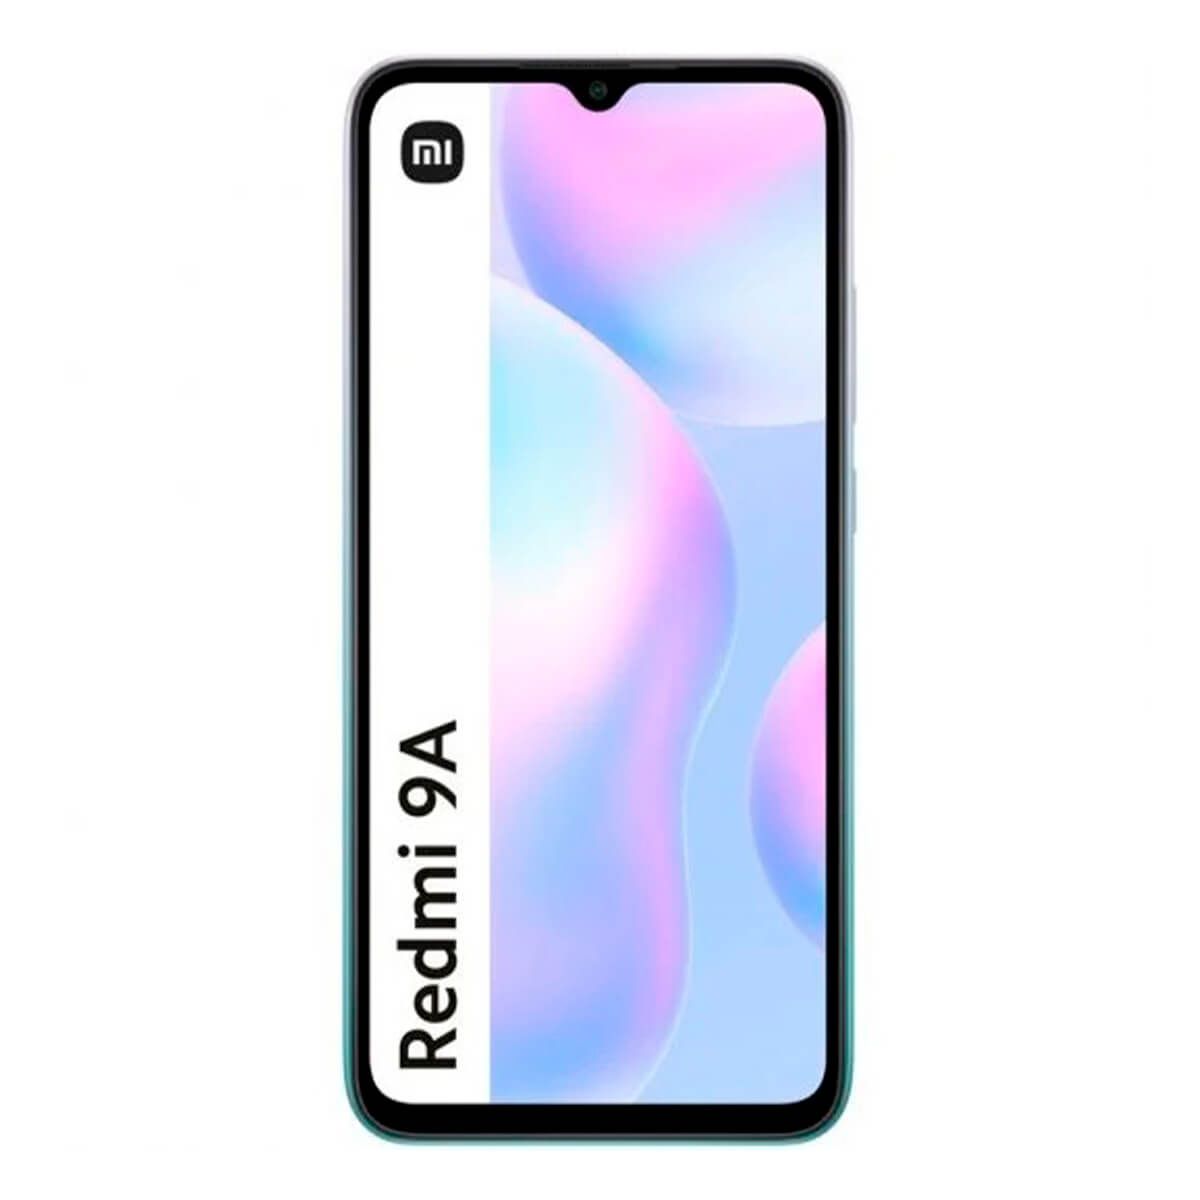 Redmi Phones :: Redmi 9A 2GB + 32GB